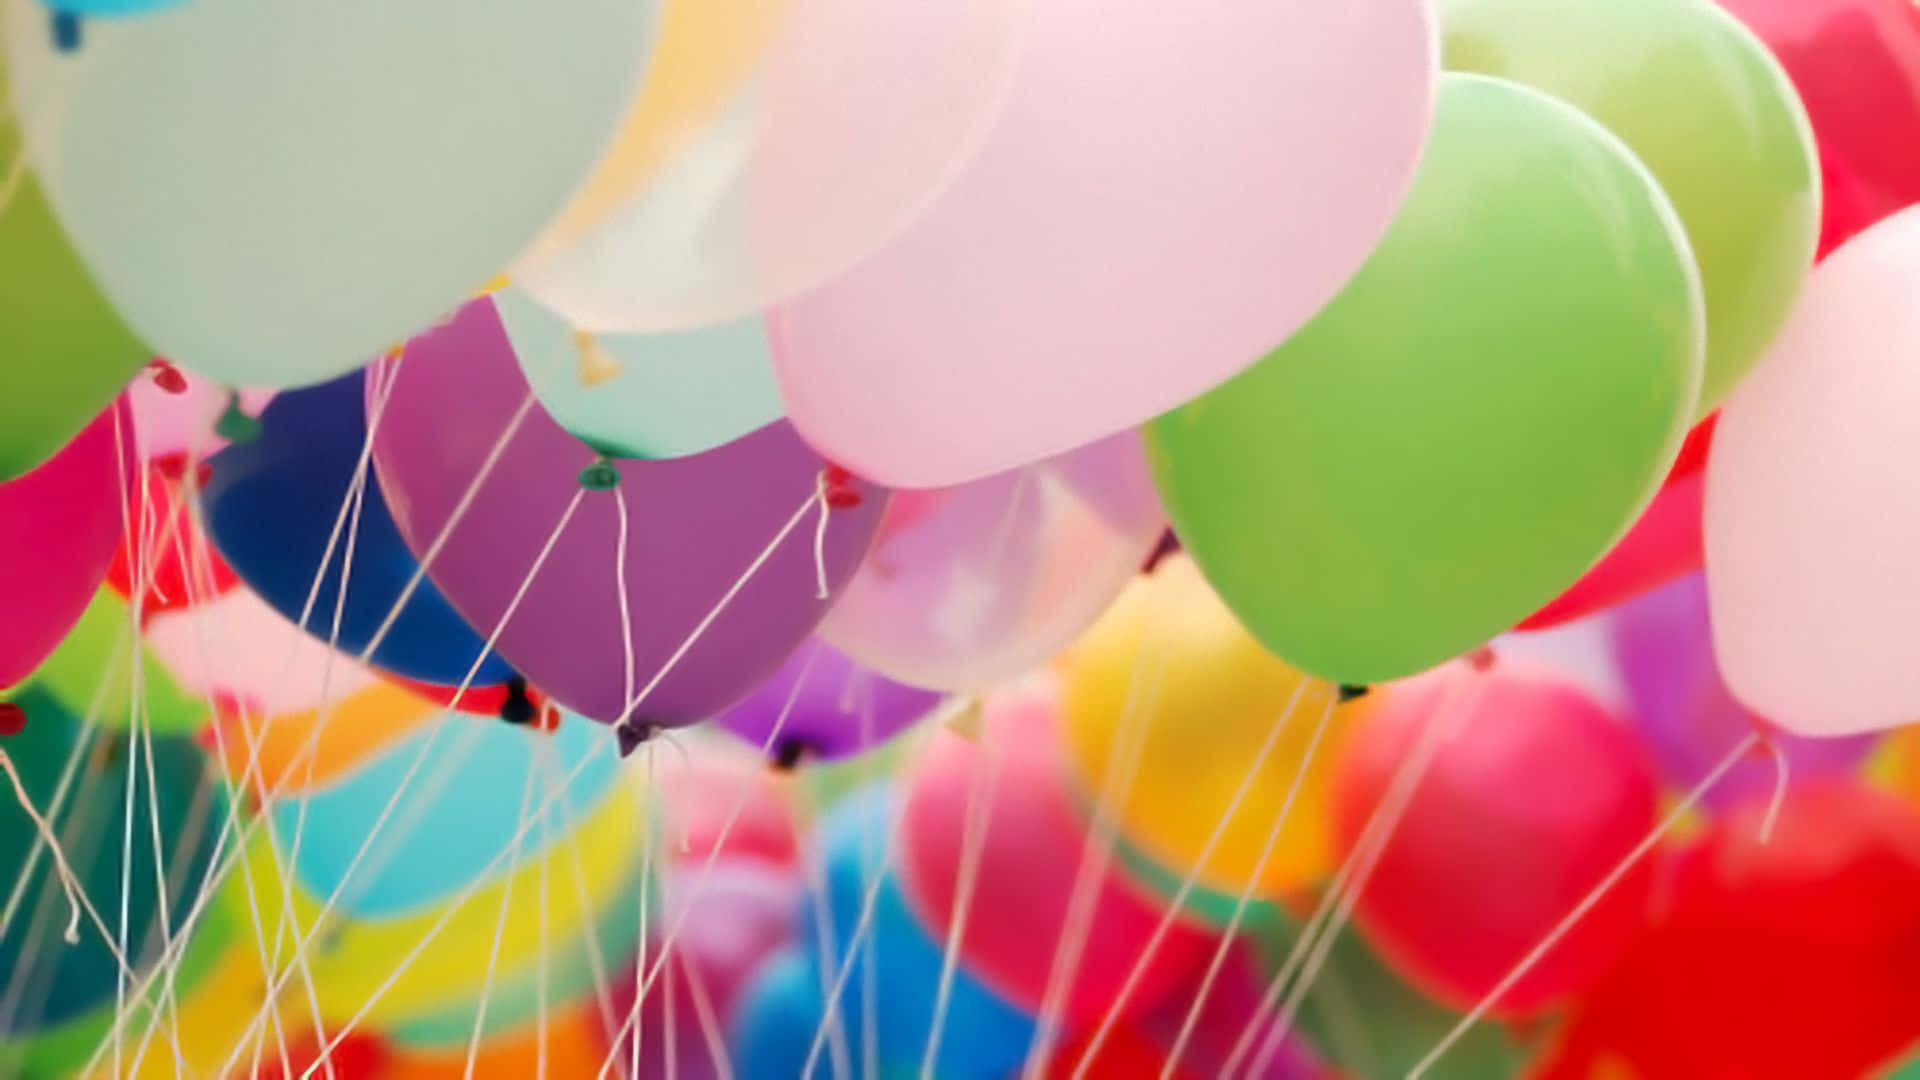 Farverigeballoner I Luften